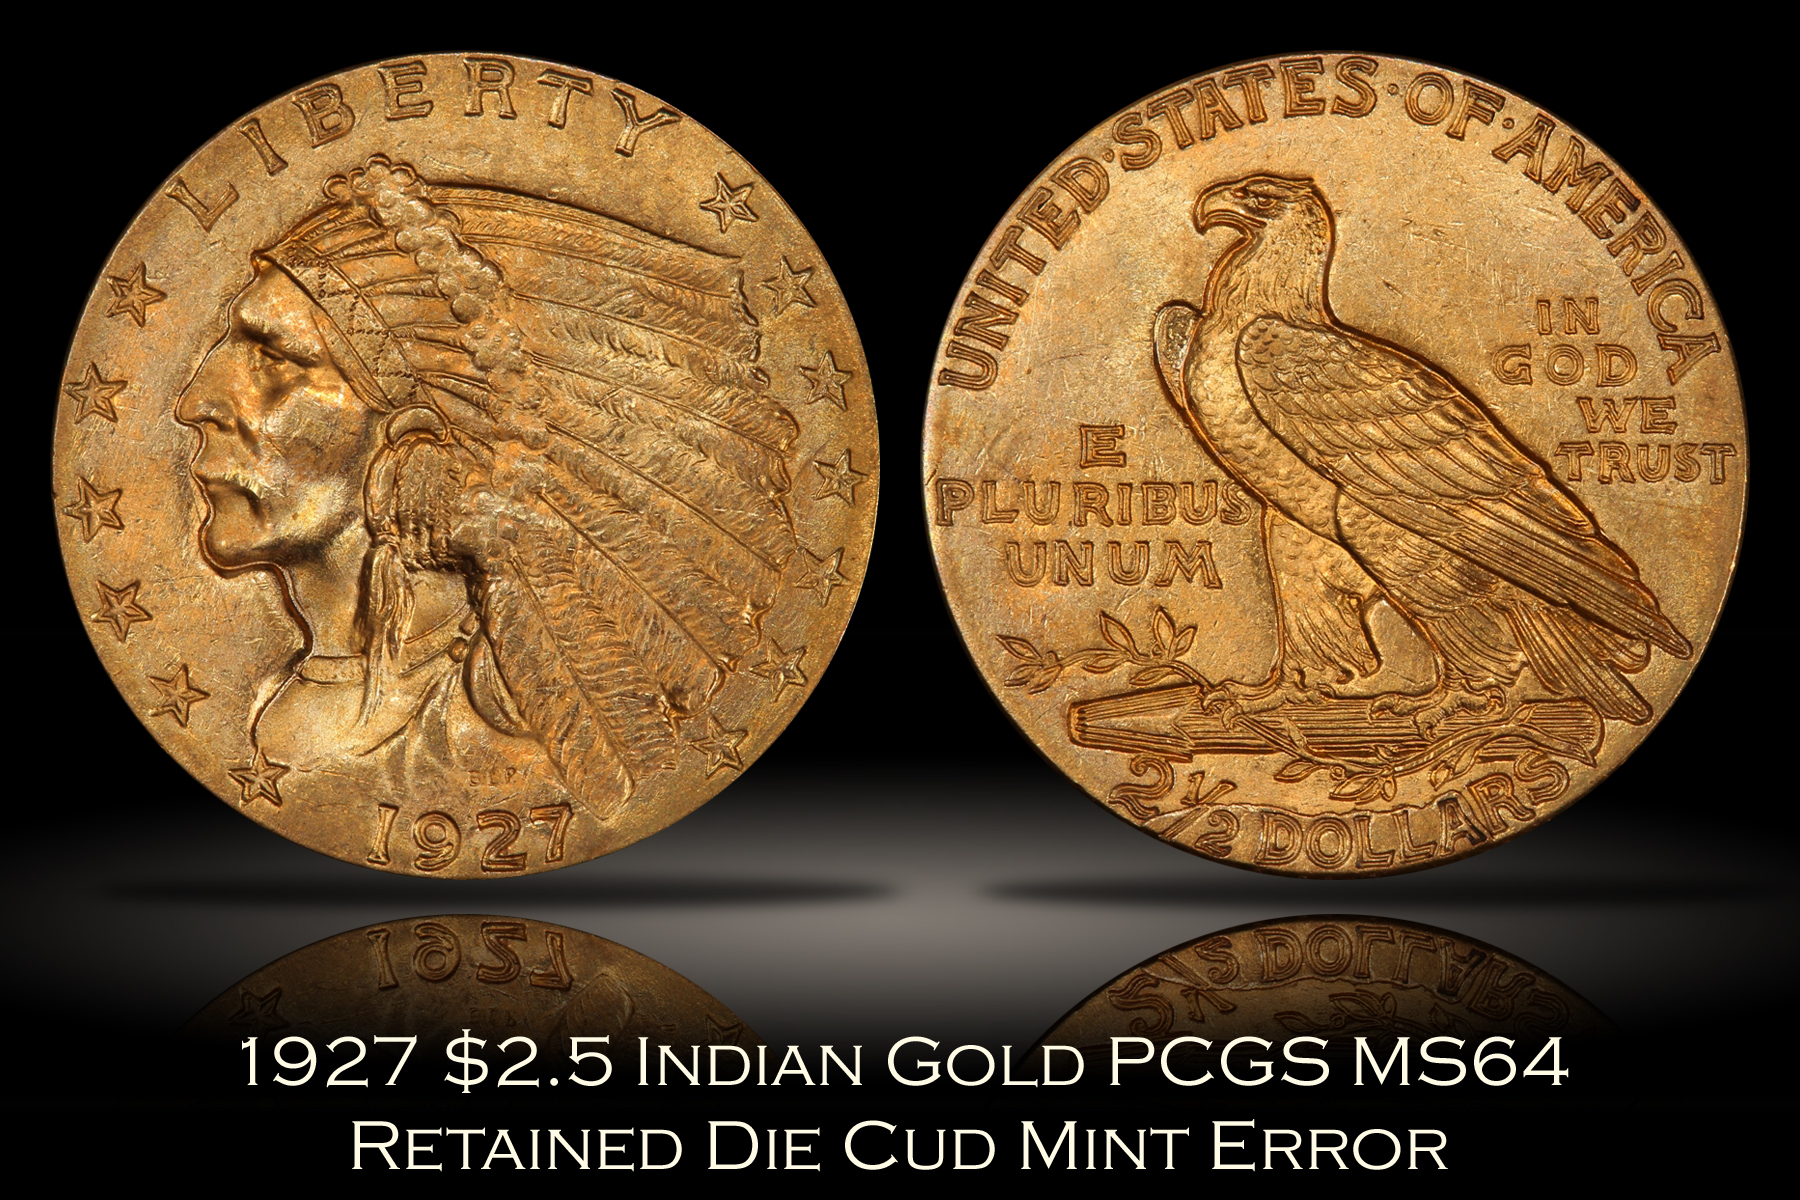 1927 $2.5 Indian Gold PCGS MS64 Retained Die Cud Error